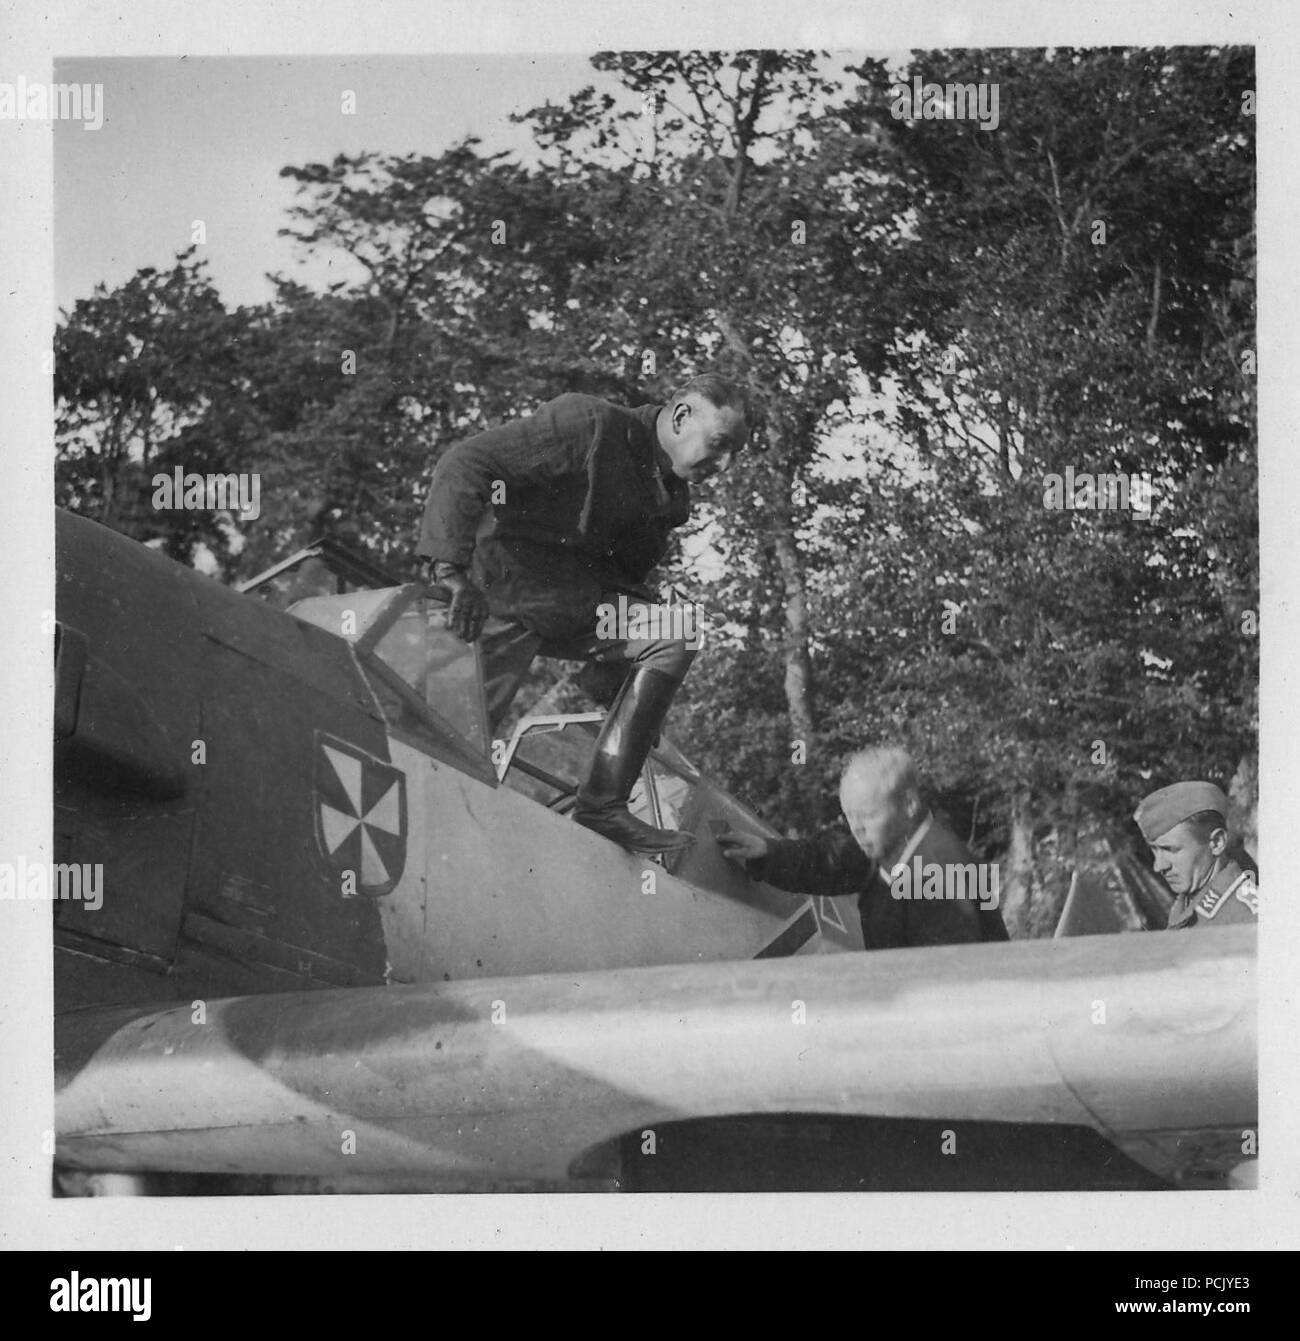 Immagine da un album di foto relative a II. Gruppe, Jagdgeschwader 3: Hauptmann Erich Woitke, Staffelkapitän di 6./JG3 e deliberando Gruppenkommandeur di II./JG3 dal 1 ottobre 1940 fino al 23 novembre 1940, scende dalla sua Messerschmitt Bf 109 E A Wierre au Bois nell'estate del 1940. Foto Stock